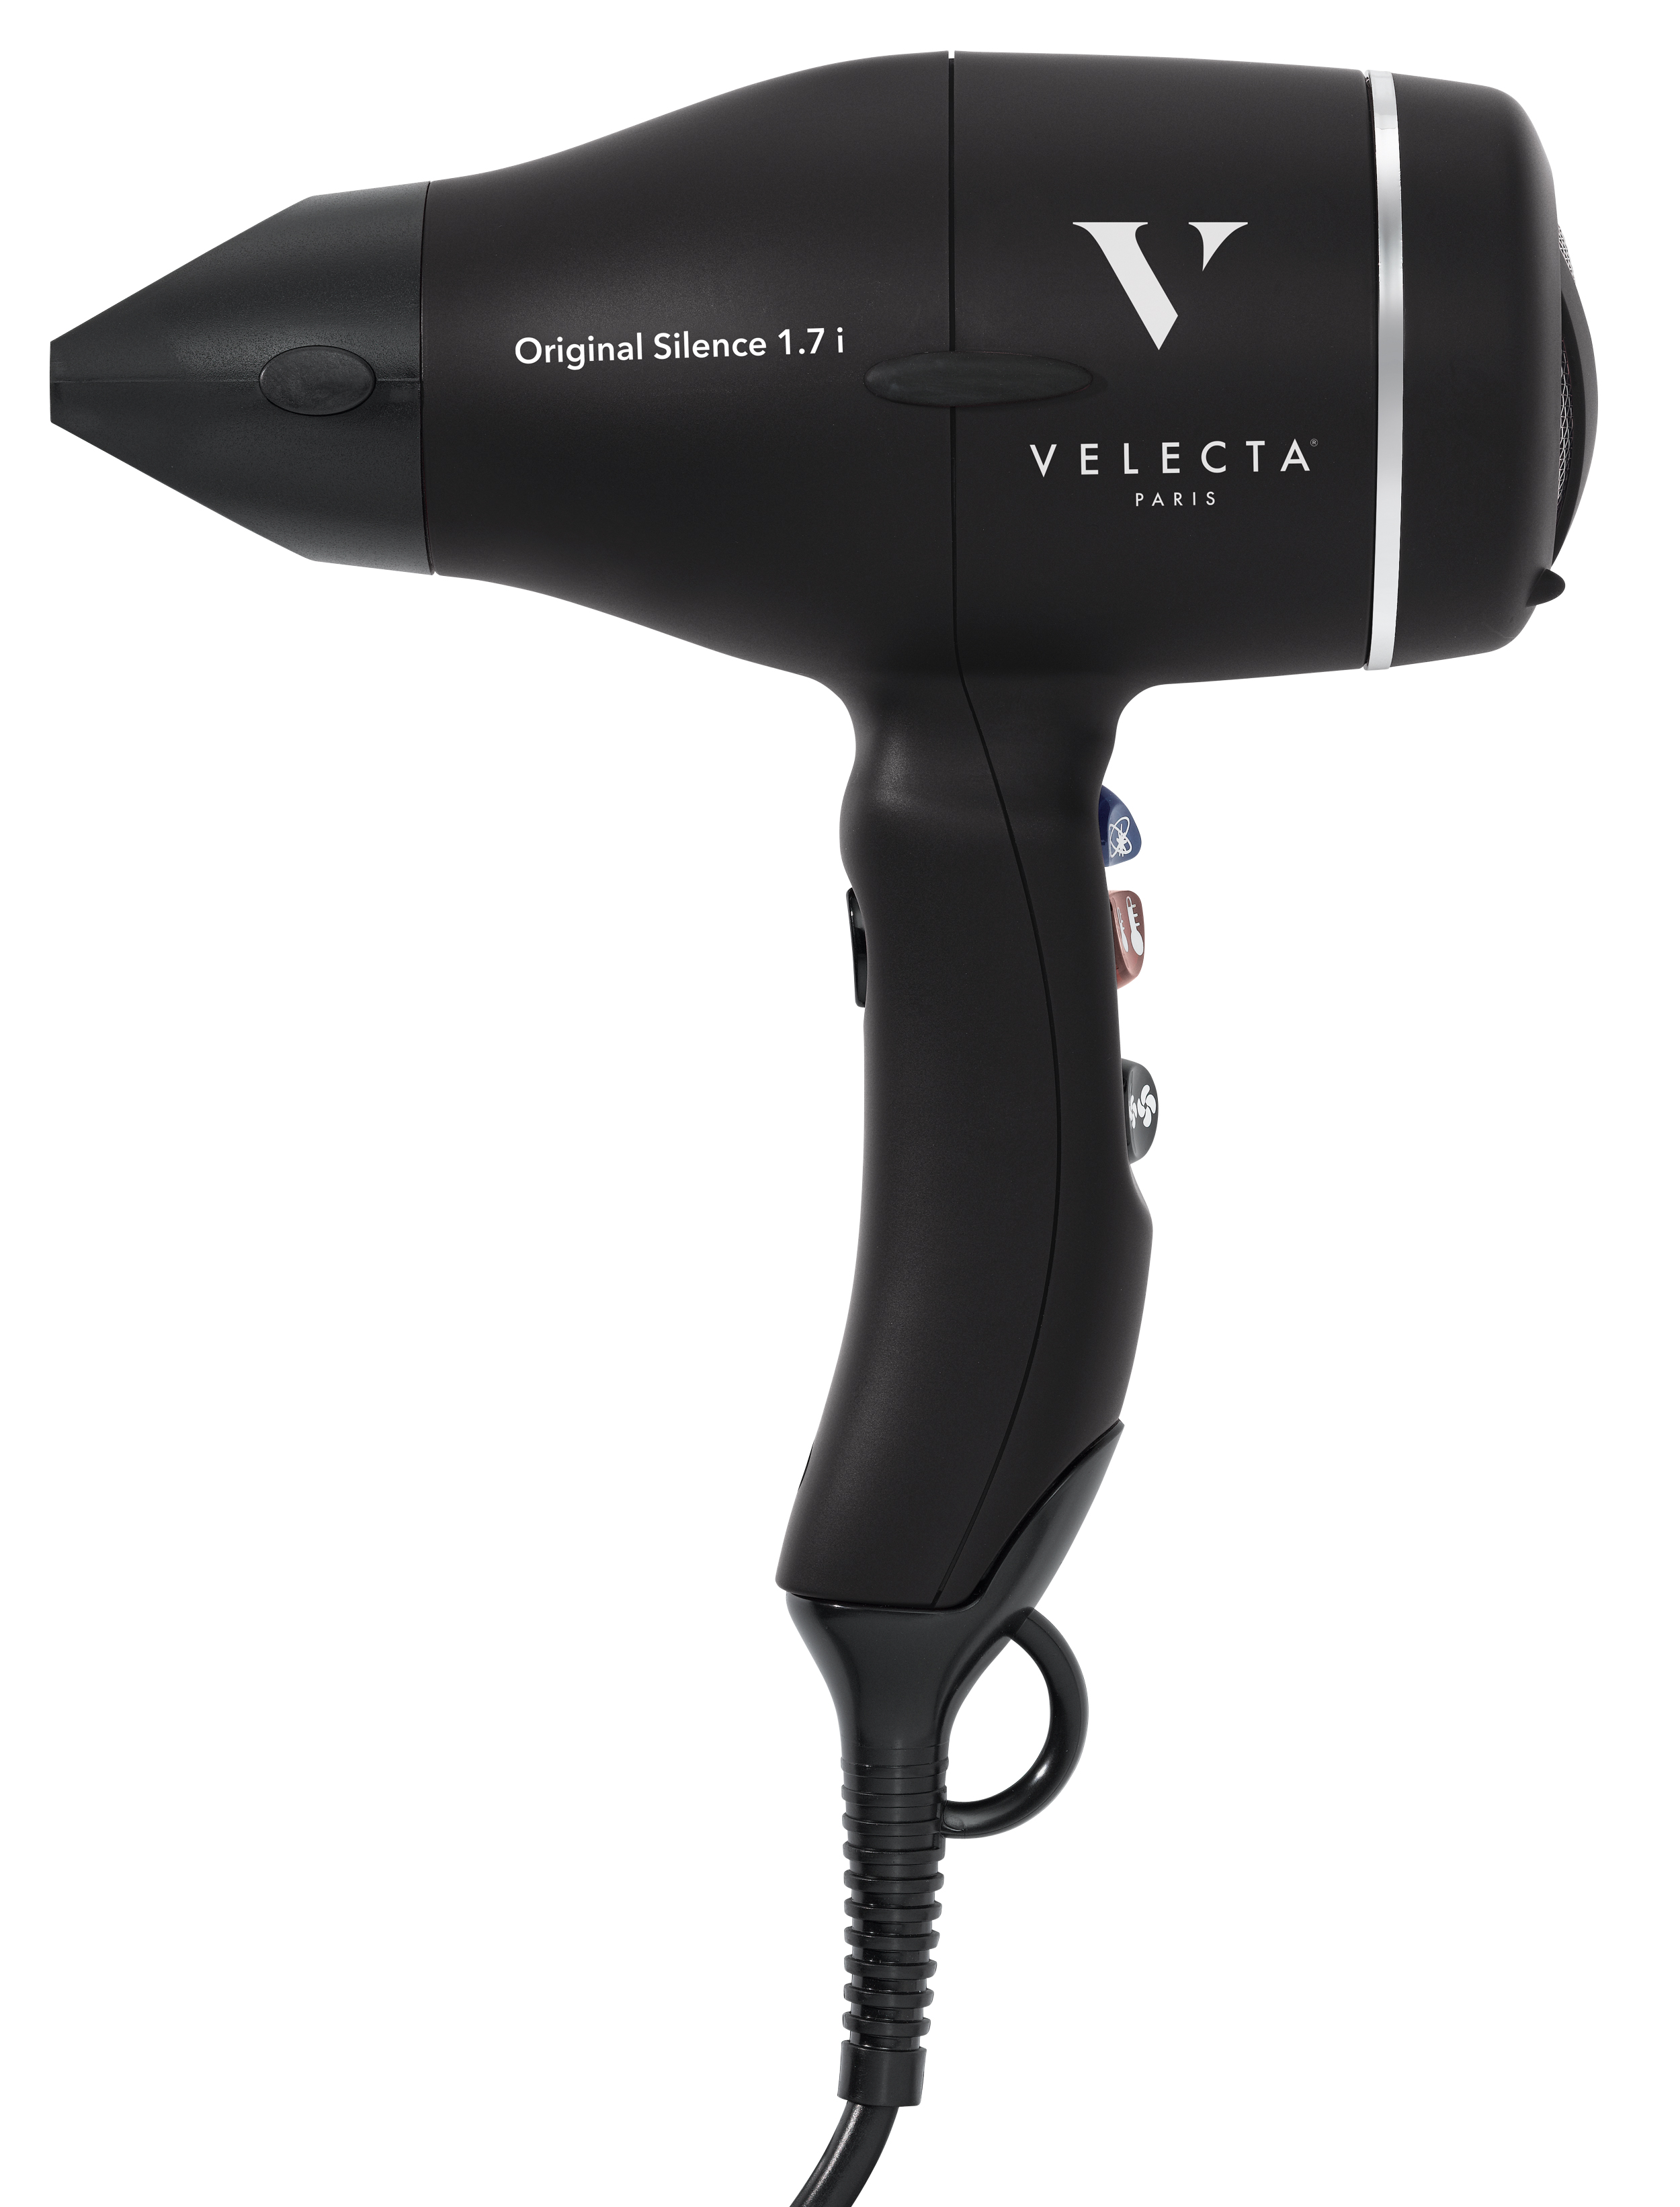 VELECTRA ORIGINAL SILENCE 1.7i Hair dryer